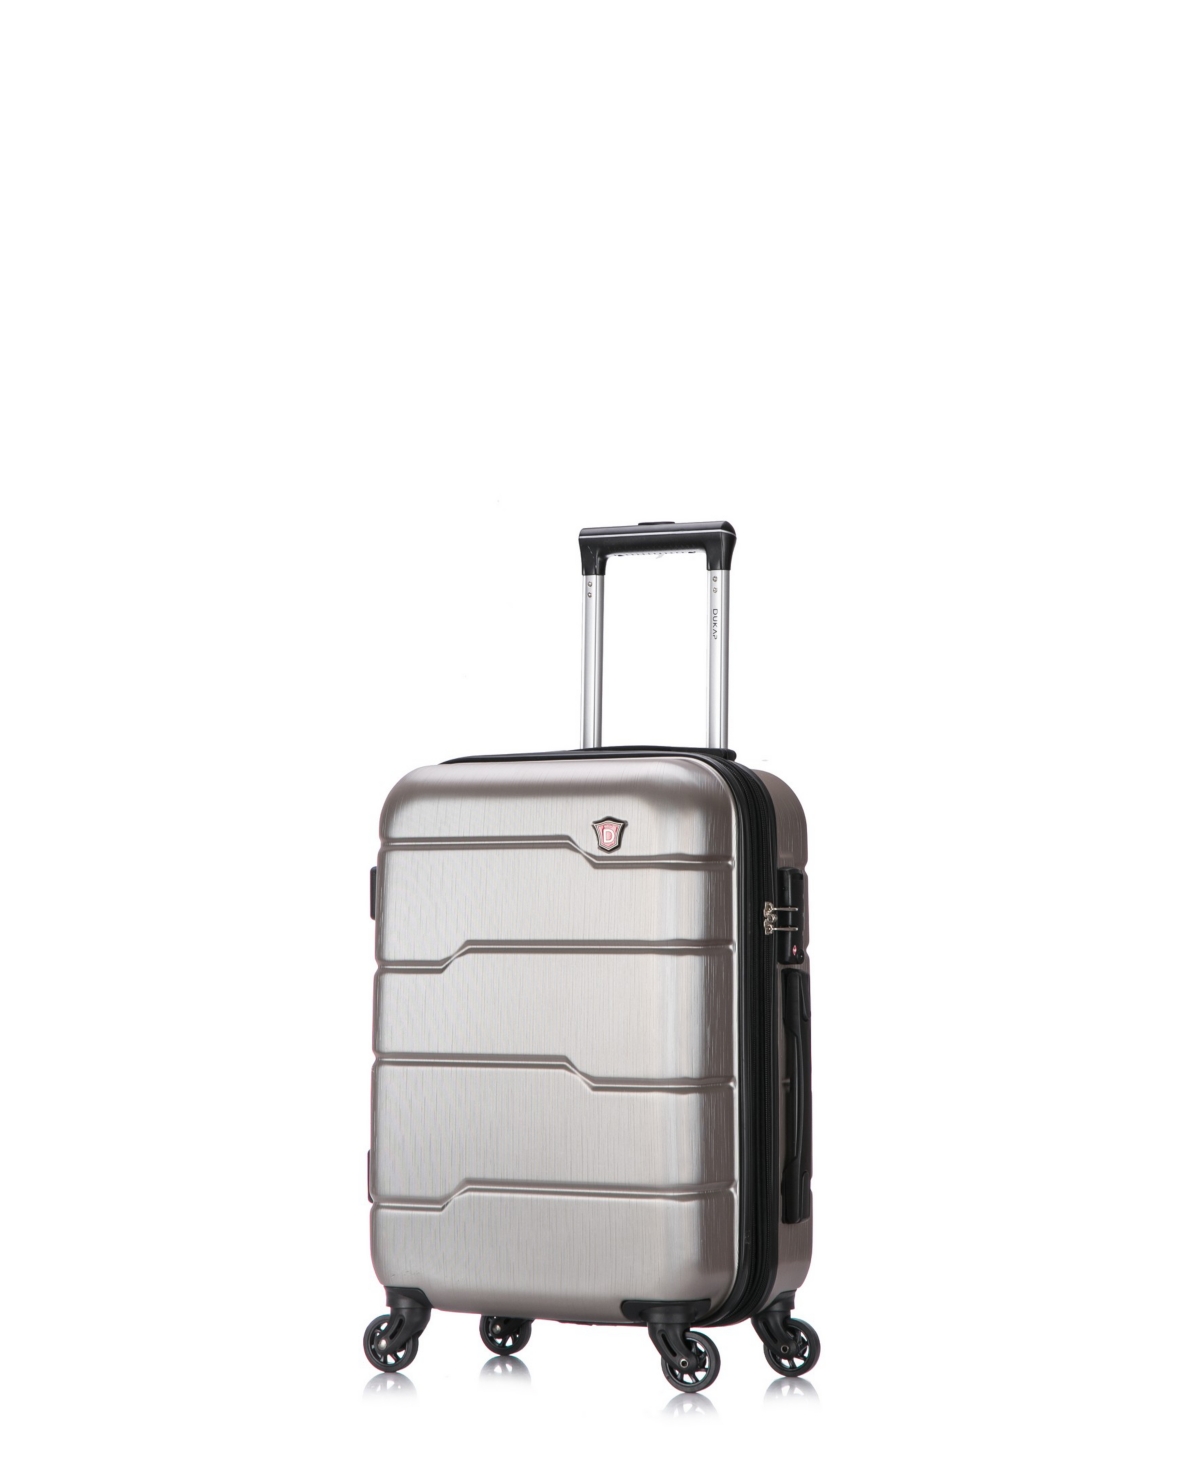 Rodez 20" Lightweight Hardside Spinner Carry-On Luggage - Rose Gold